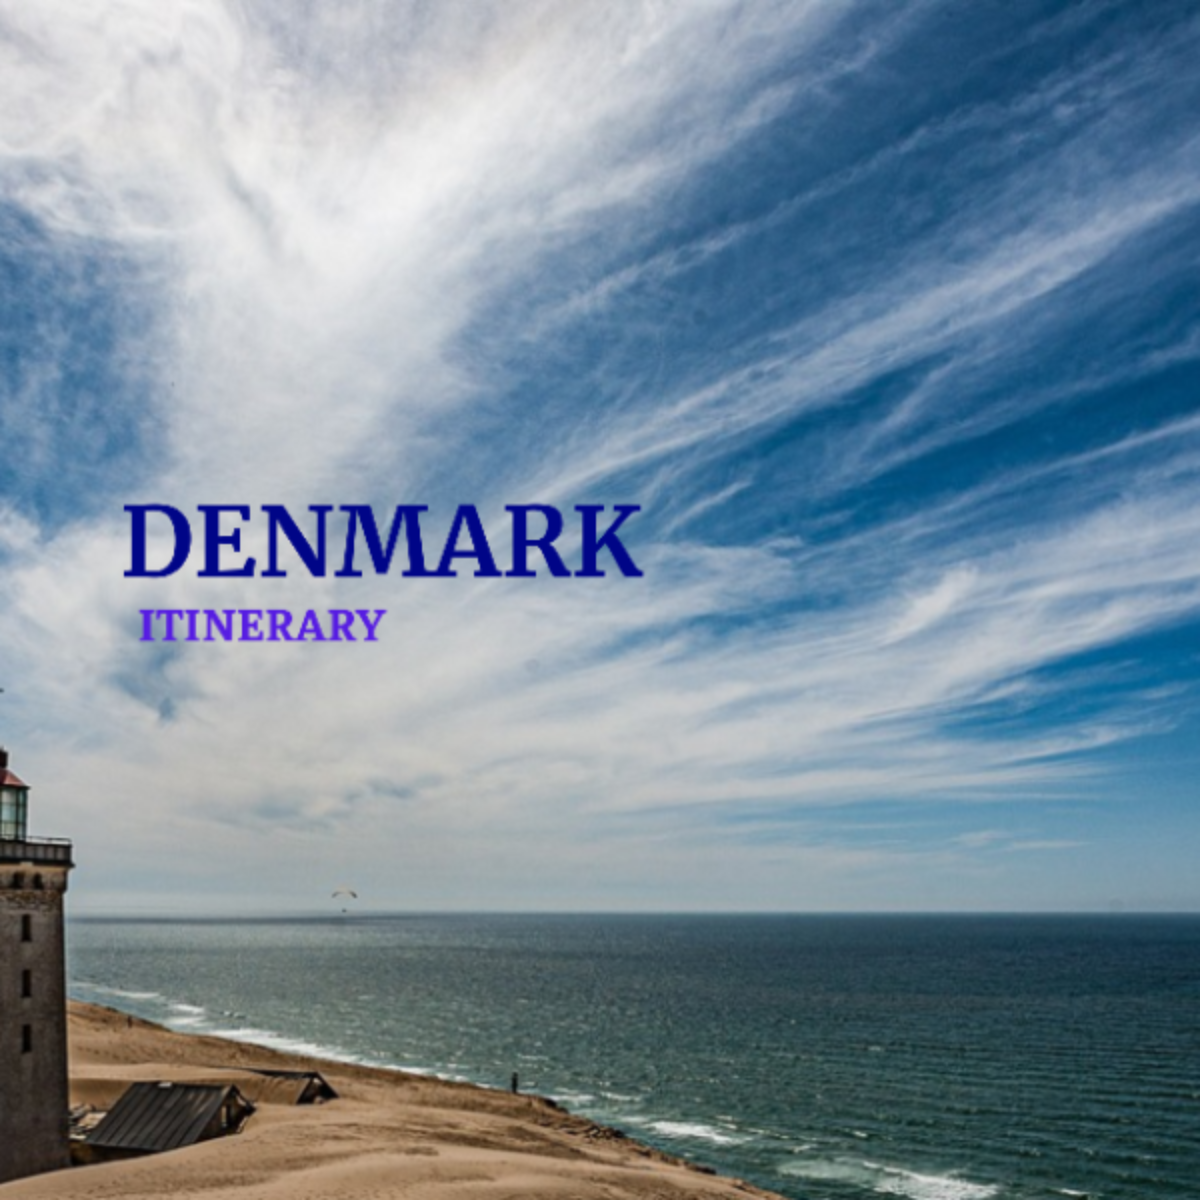 Denmark Itinerary Template